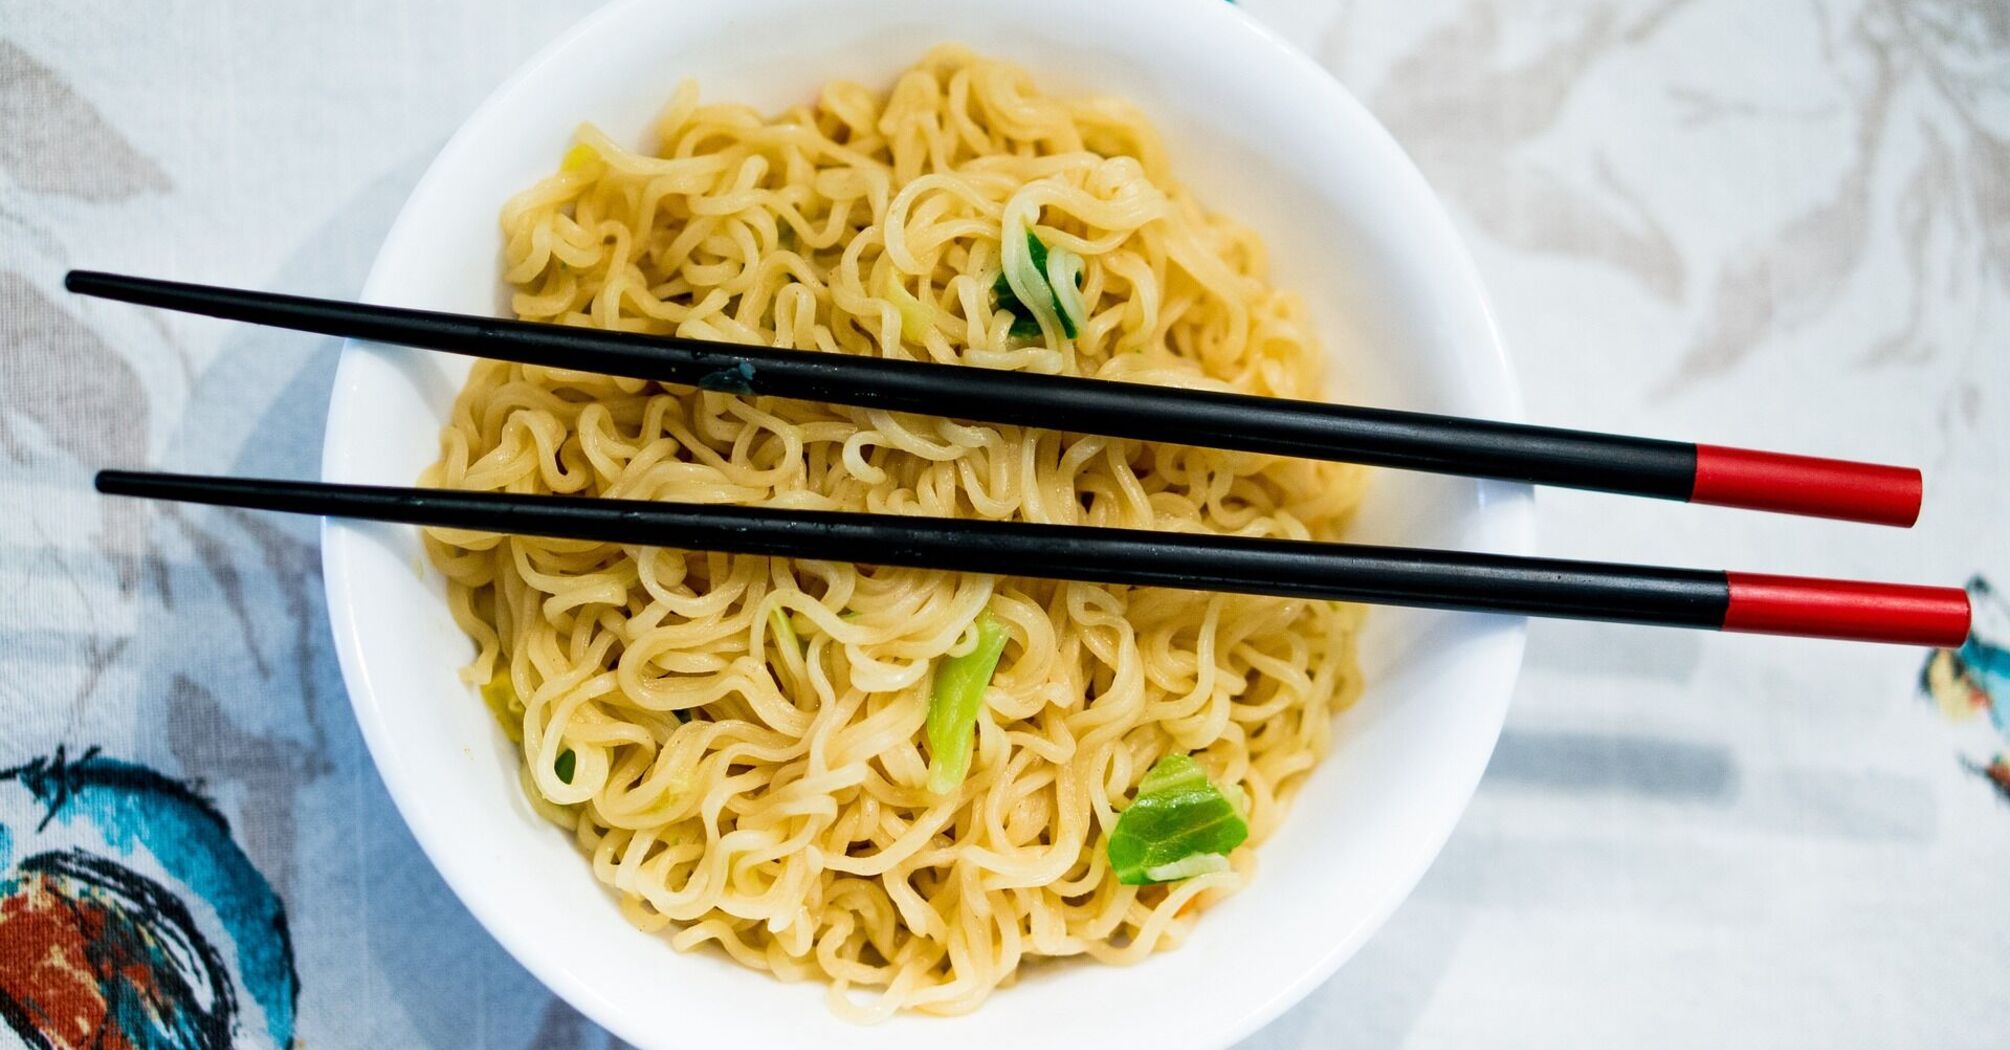 Noodles in a plate, chopsticks